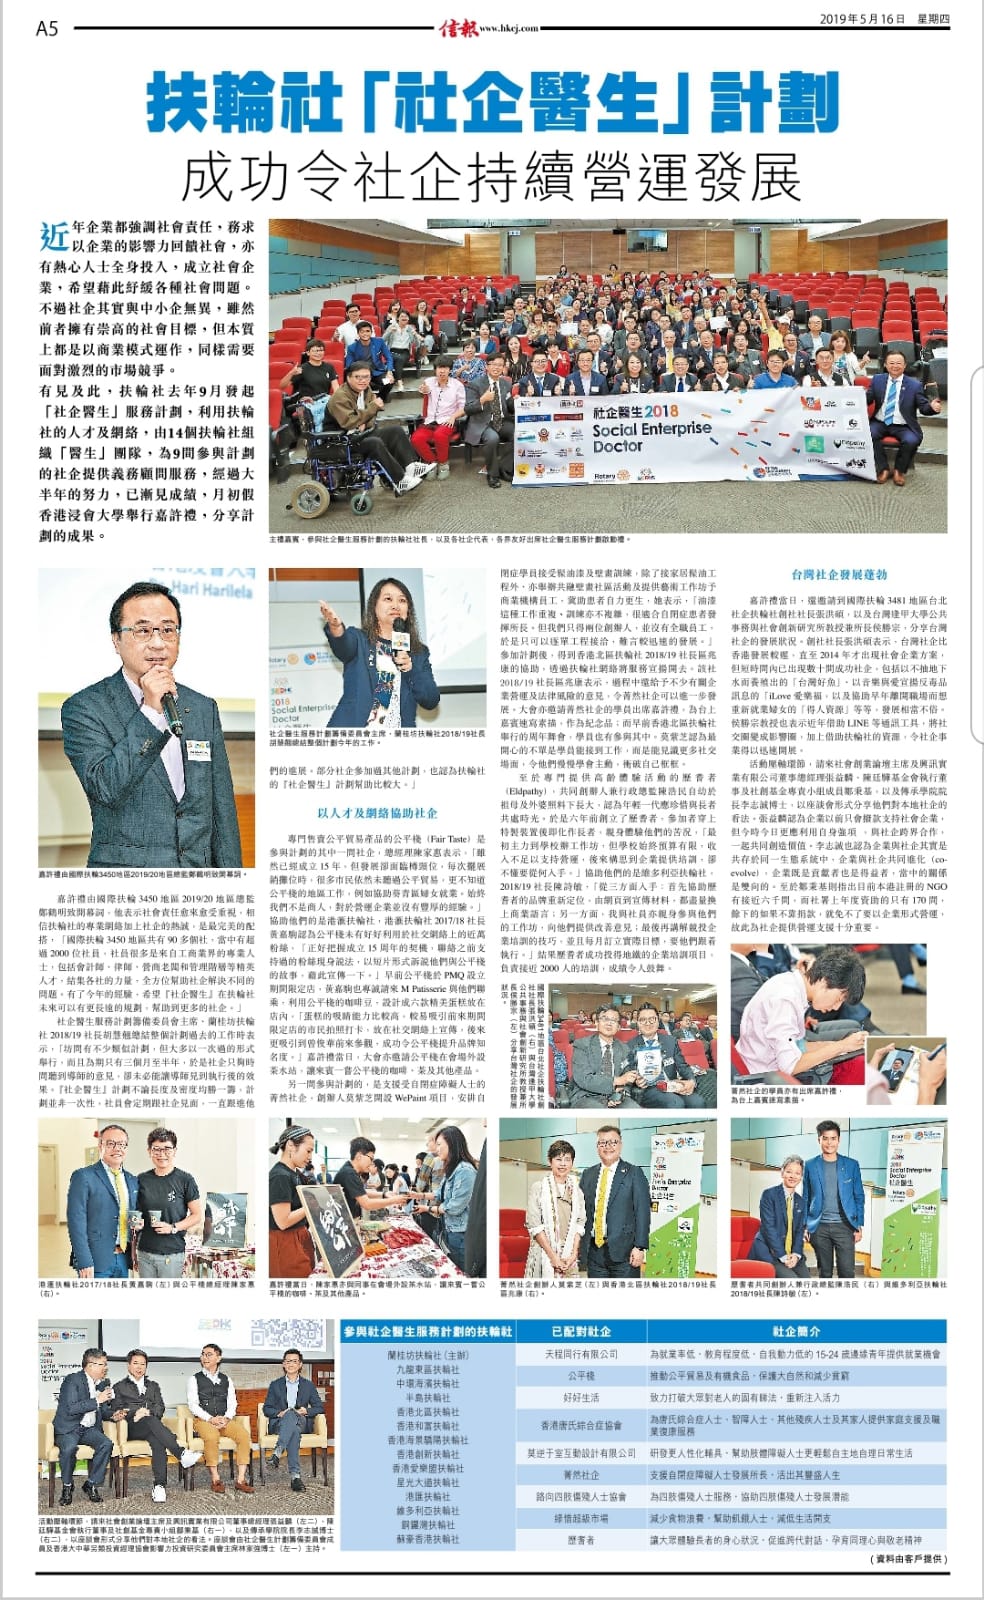 soarticle on the social enterprise doctor program by Hong Kong Economic Journal